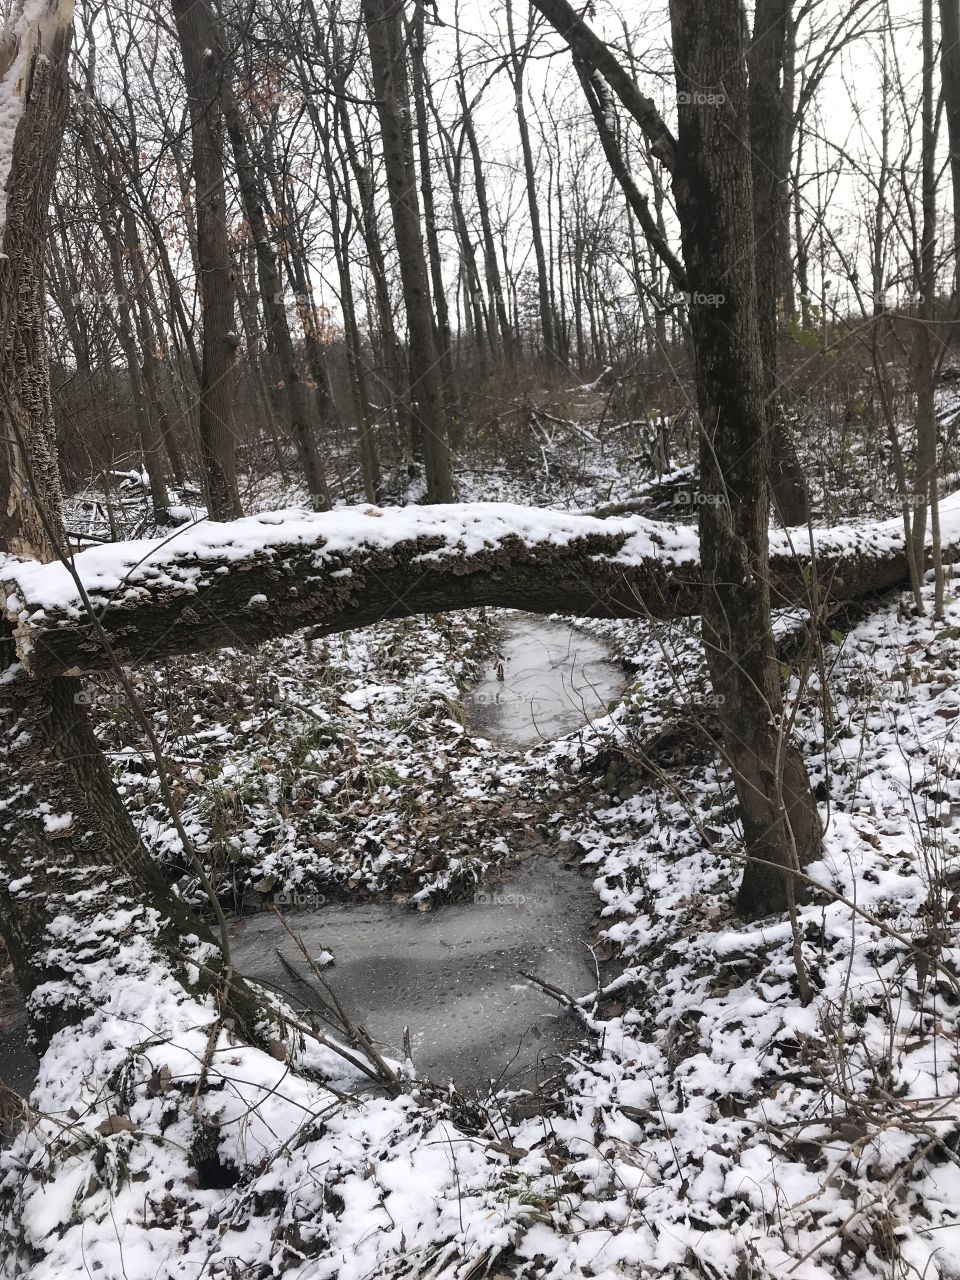 Fallen tree in the woods with snow. Frozen creek underneath. 